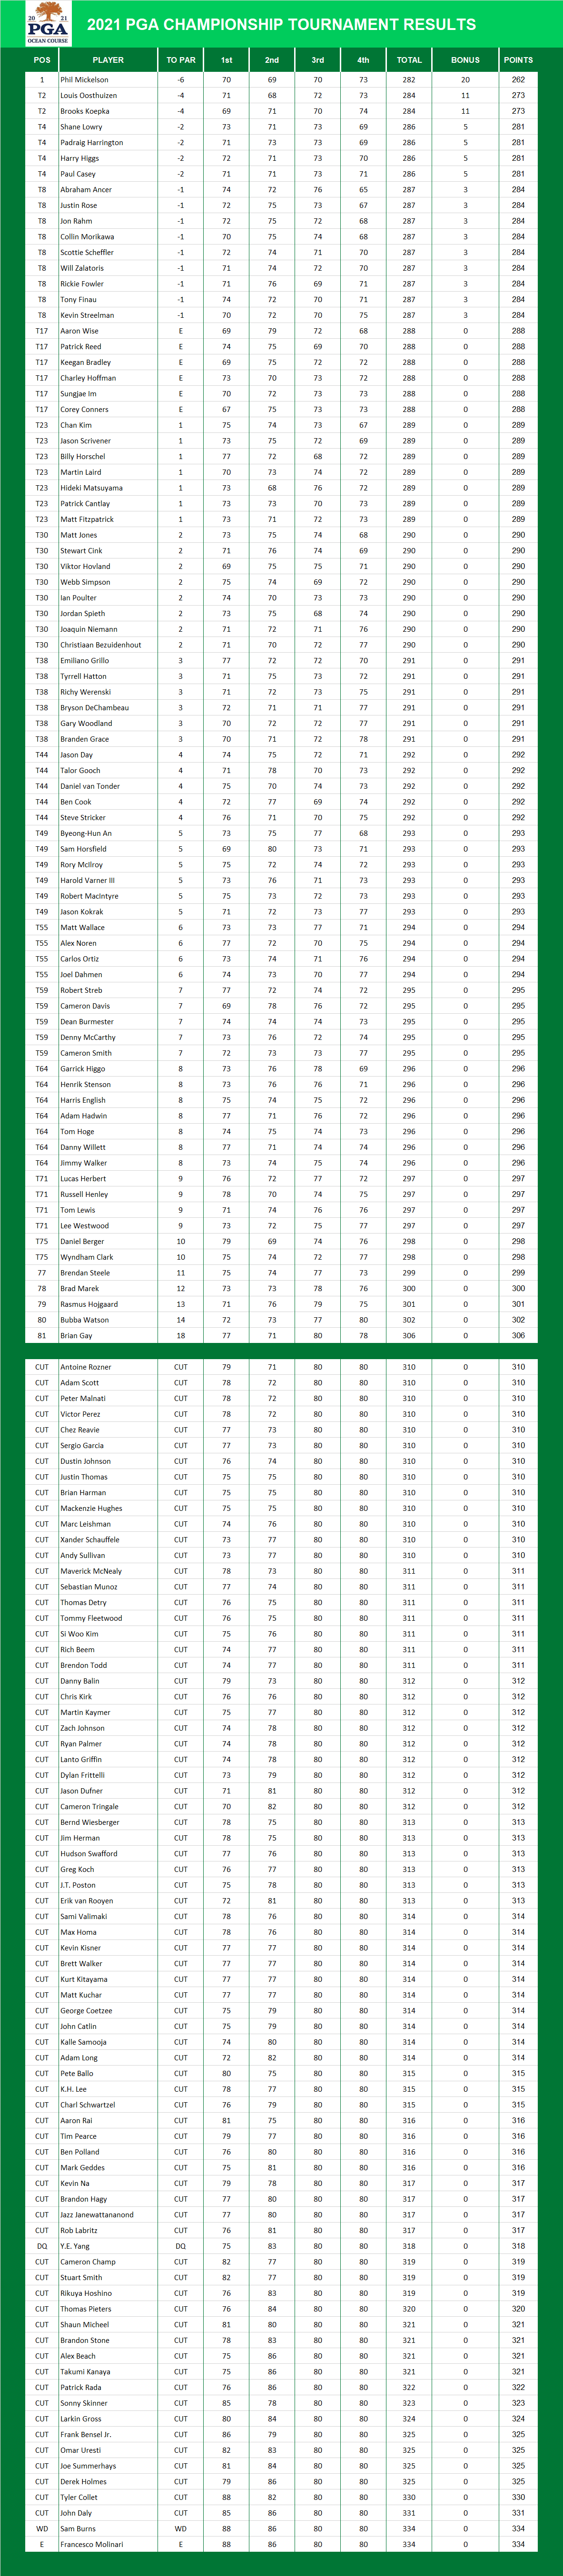 2021 PGA Championship Results